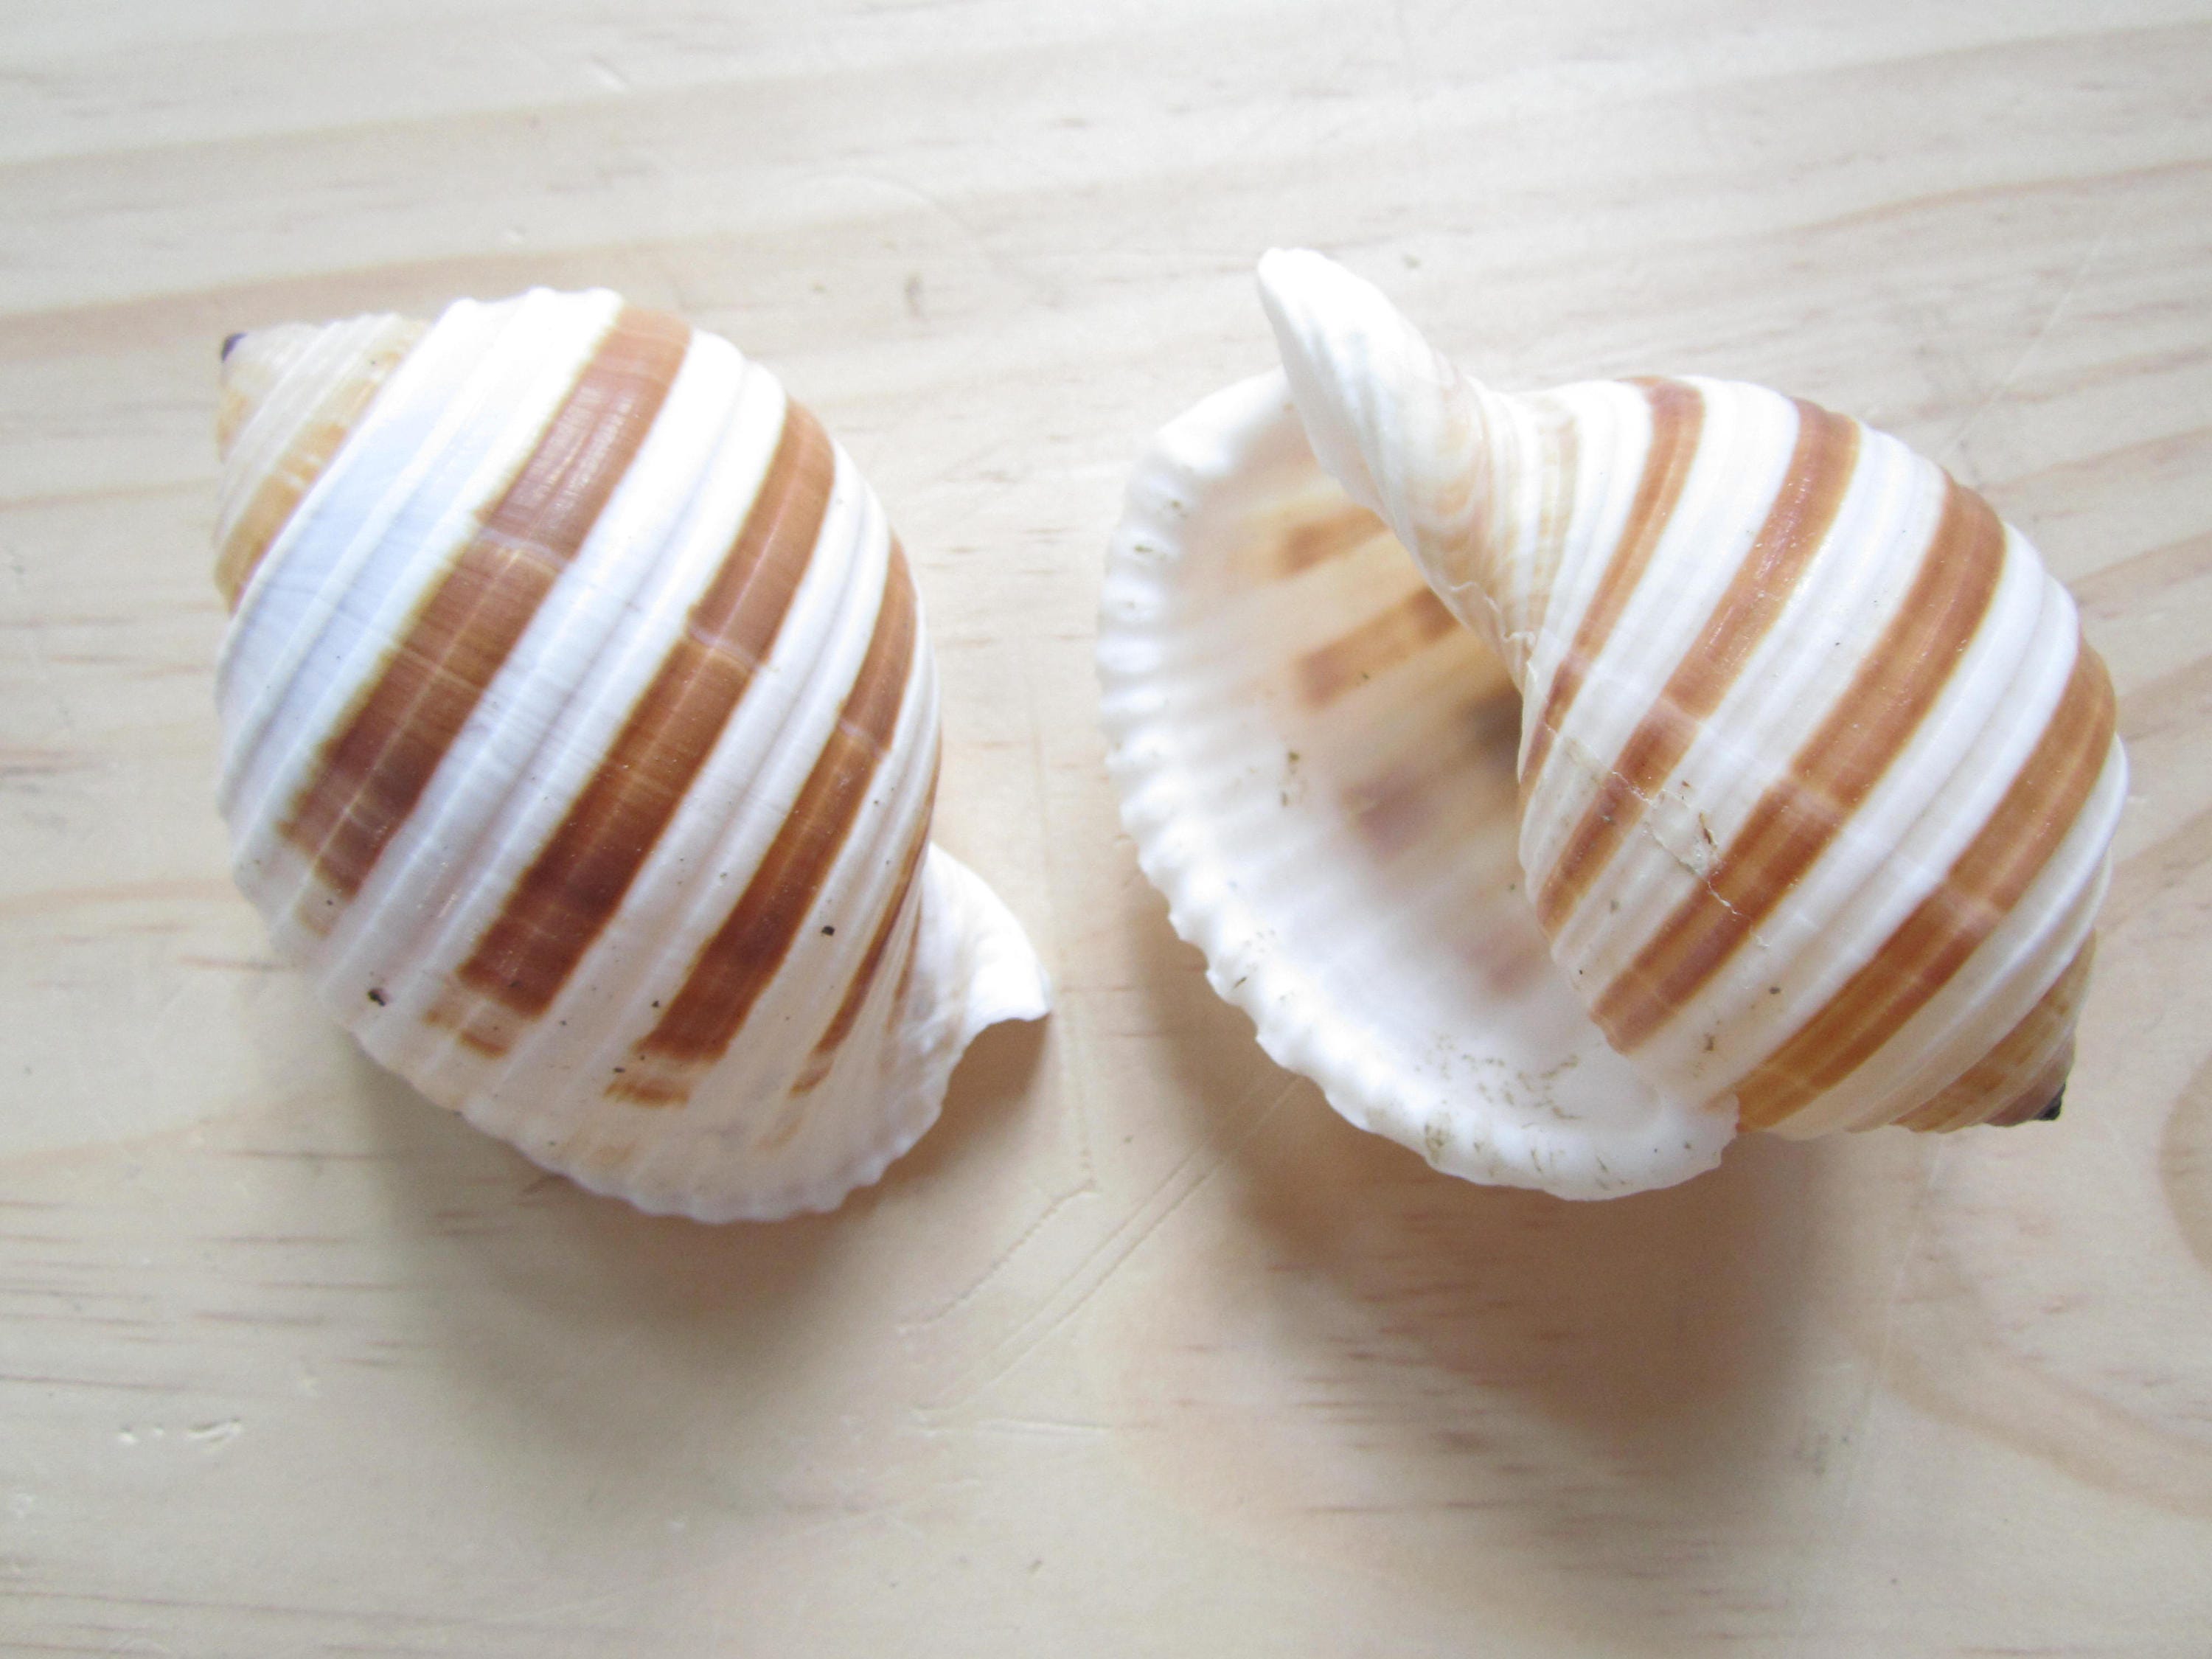 Pink Umbonium Seashells-Small Sea Shells Supplies-Botton Top Shells-Shell  Vase Fillers-Crafting Shells-Pink Sea Shells